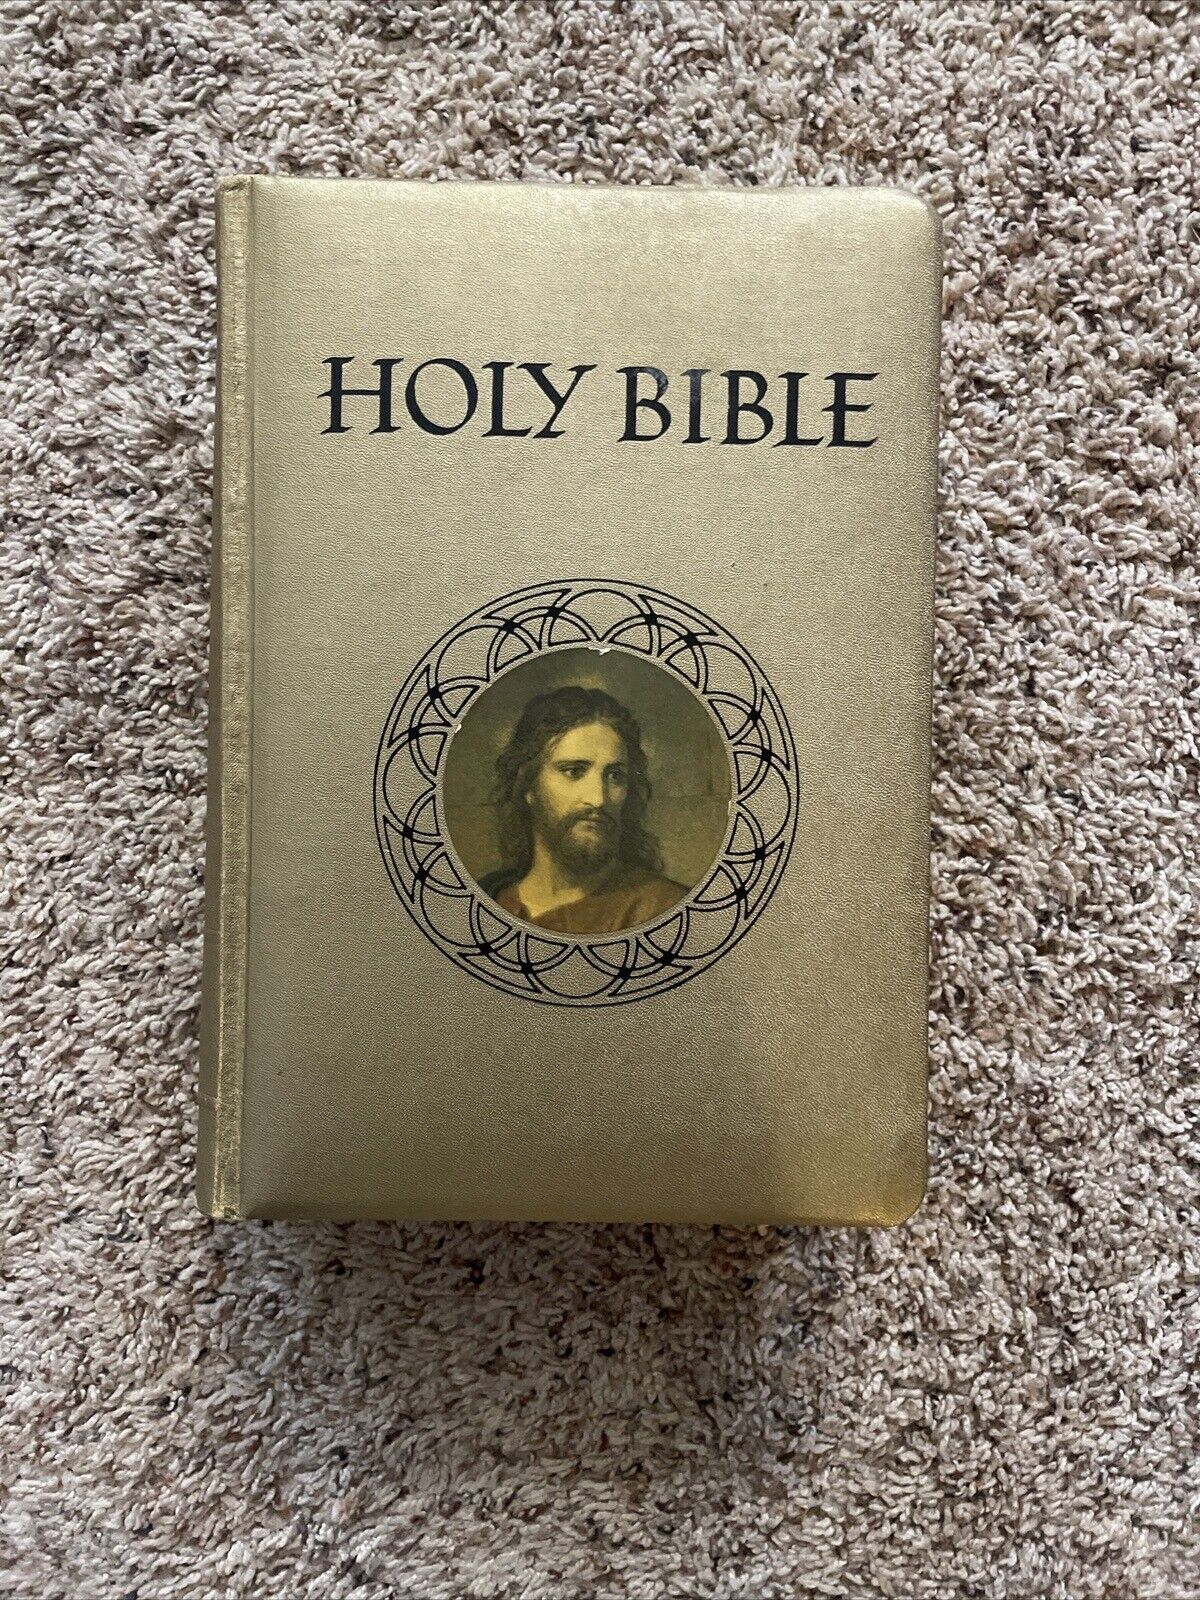 1956 Family Holy Bible Guiding Light Edition King James Version Good Counsel Pb.